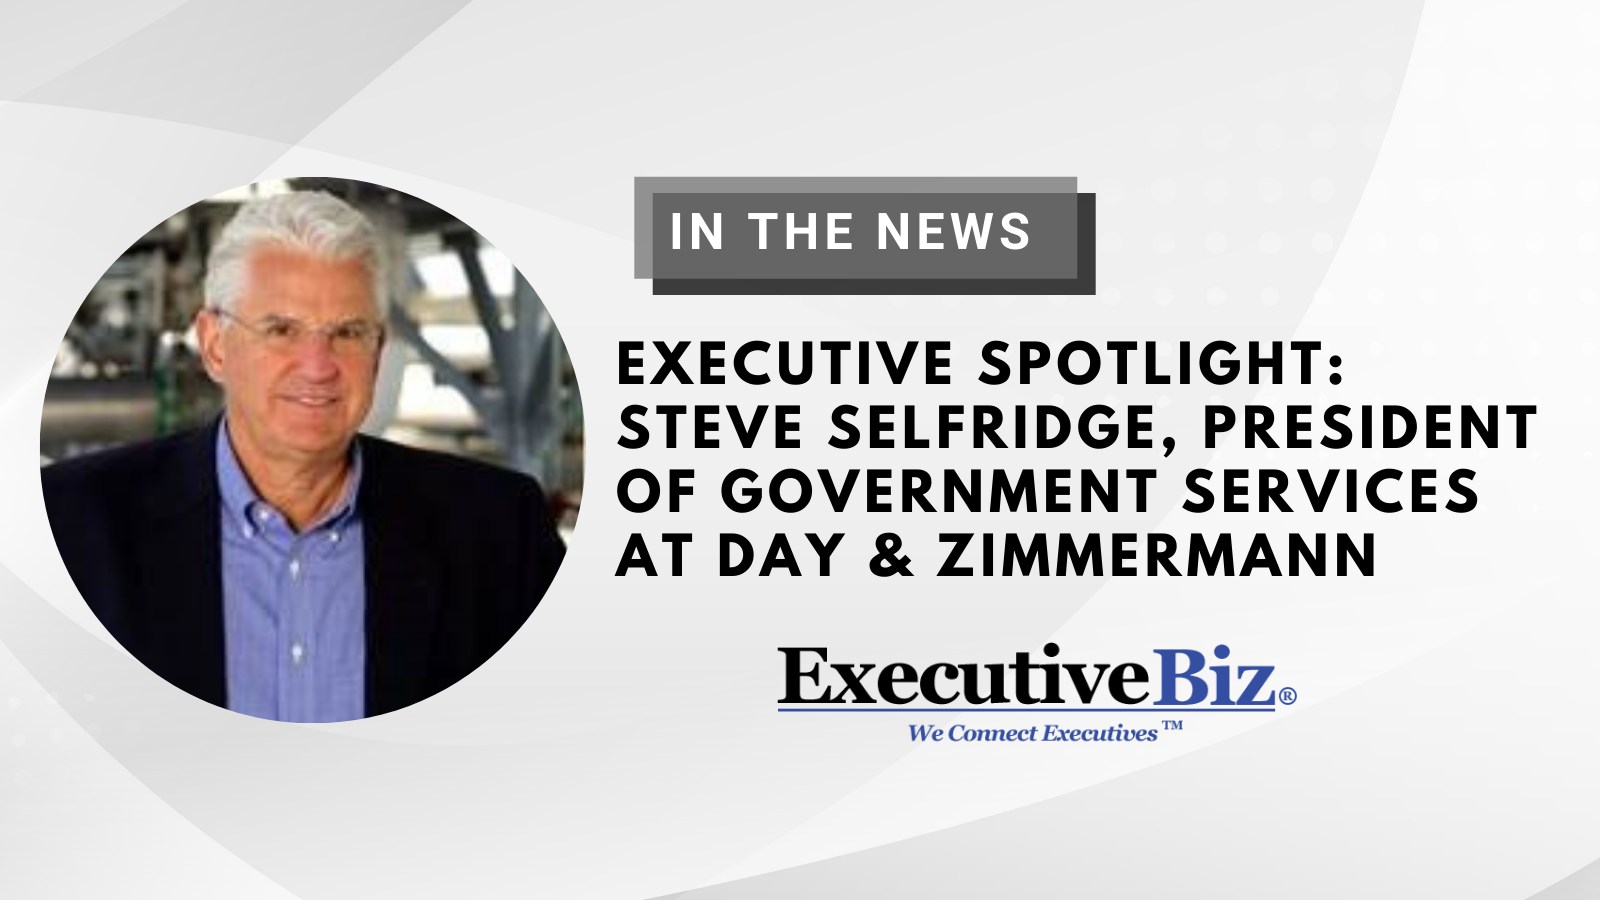 IN THE NEWS: ExecutiveBiz Features Steve Selfridge in Executive Spotlight